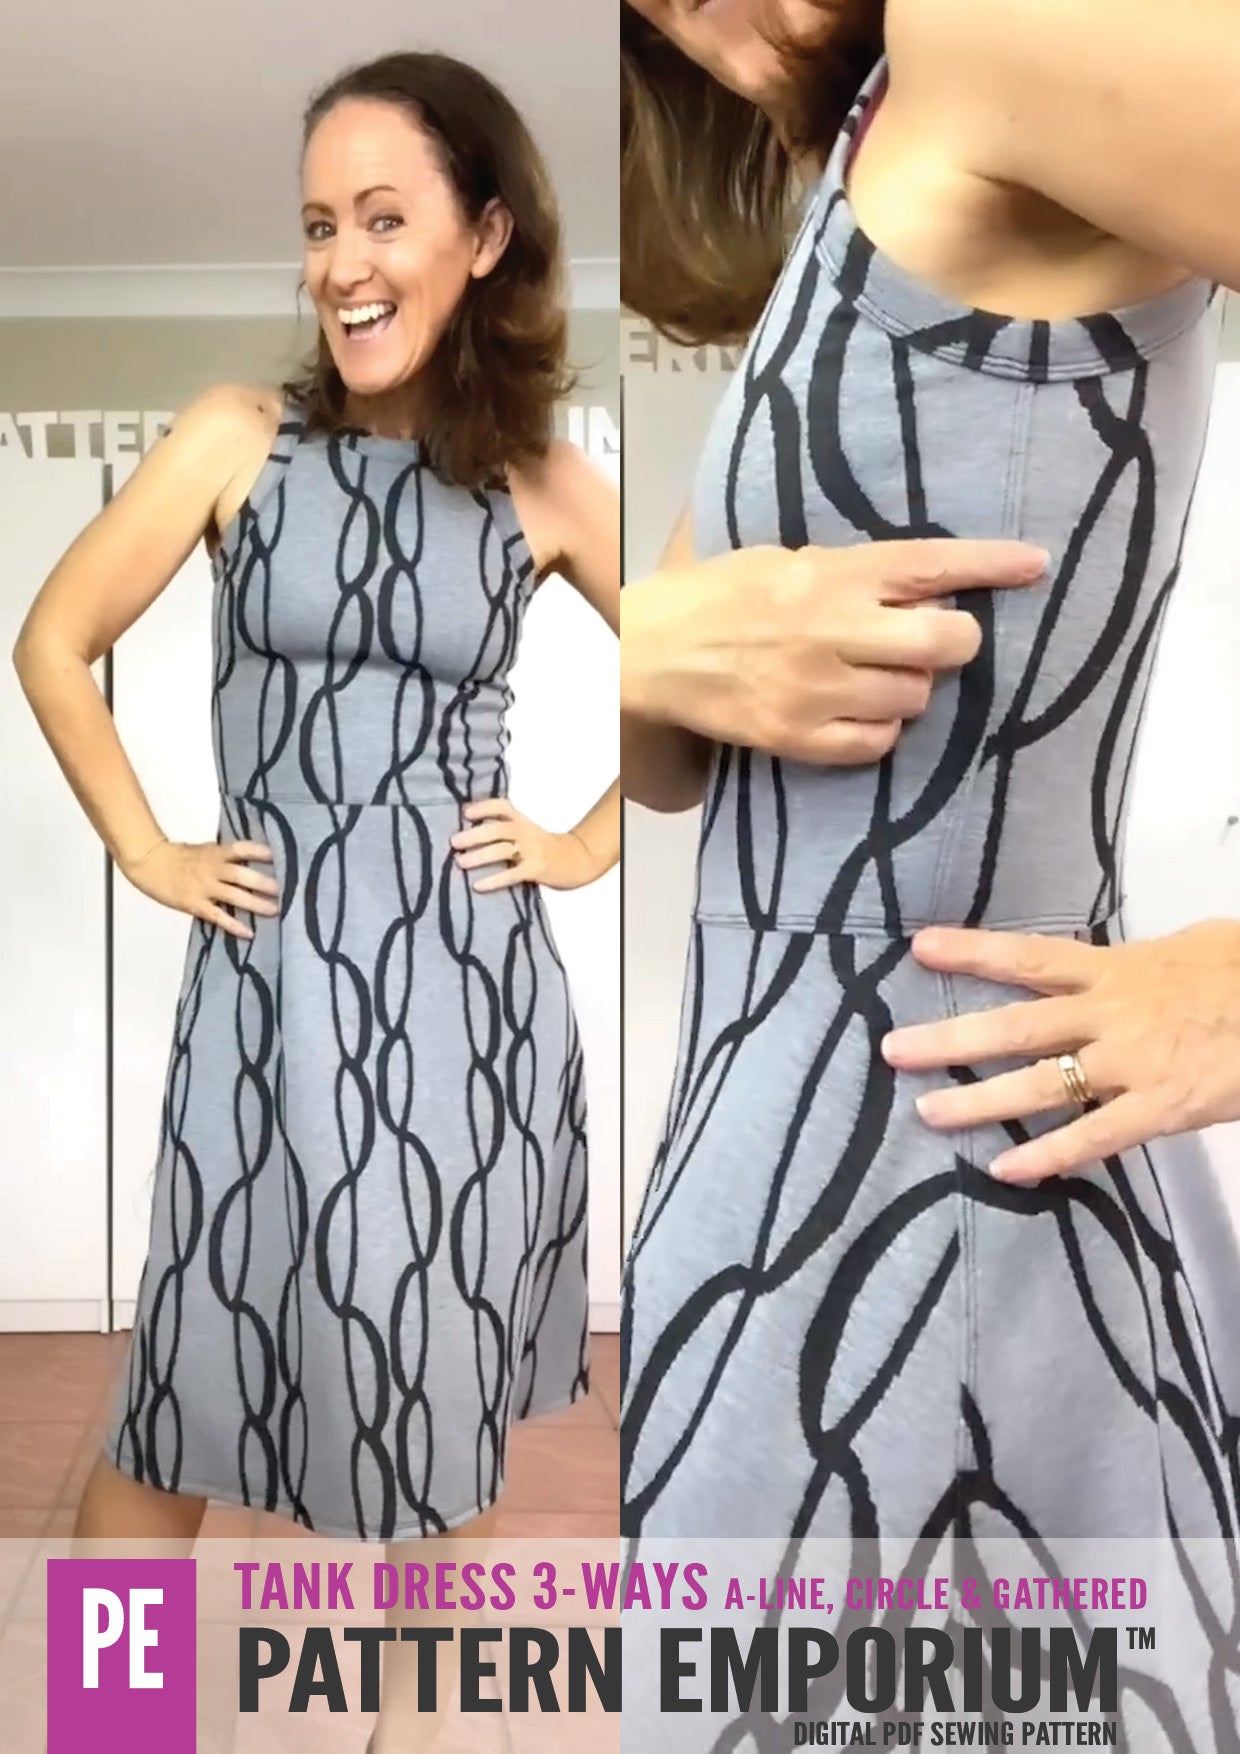 Tank Dress 3-Ways | Sewing Pattern